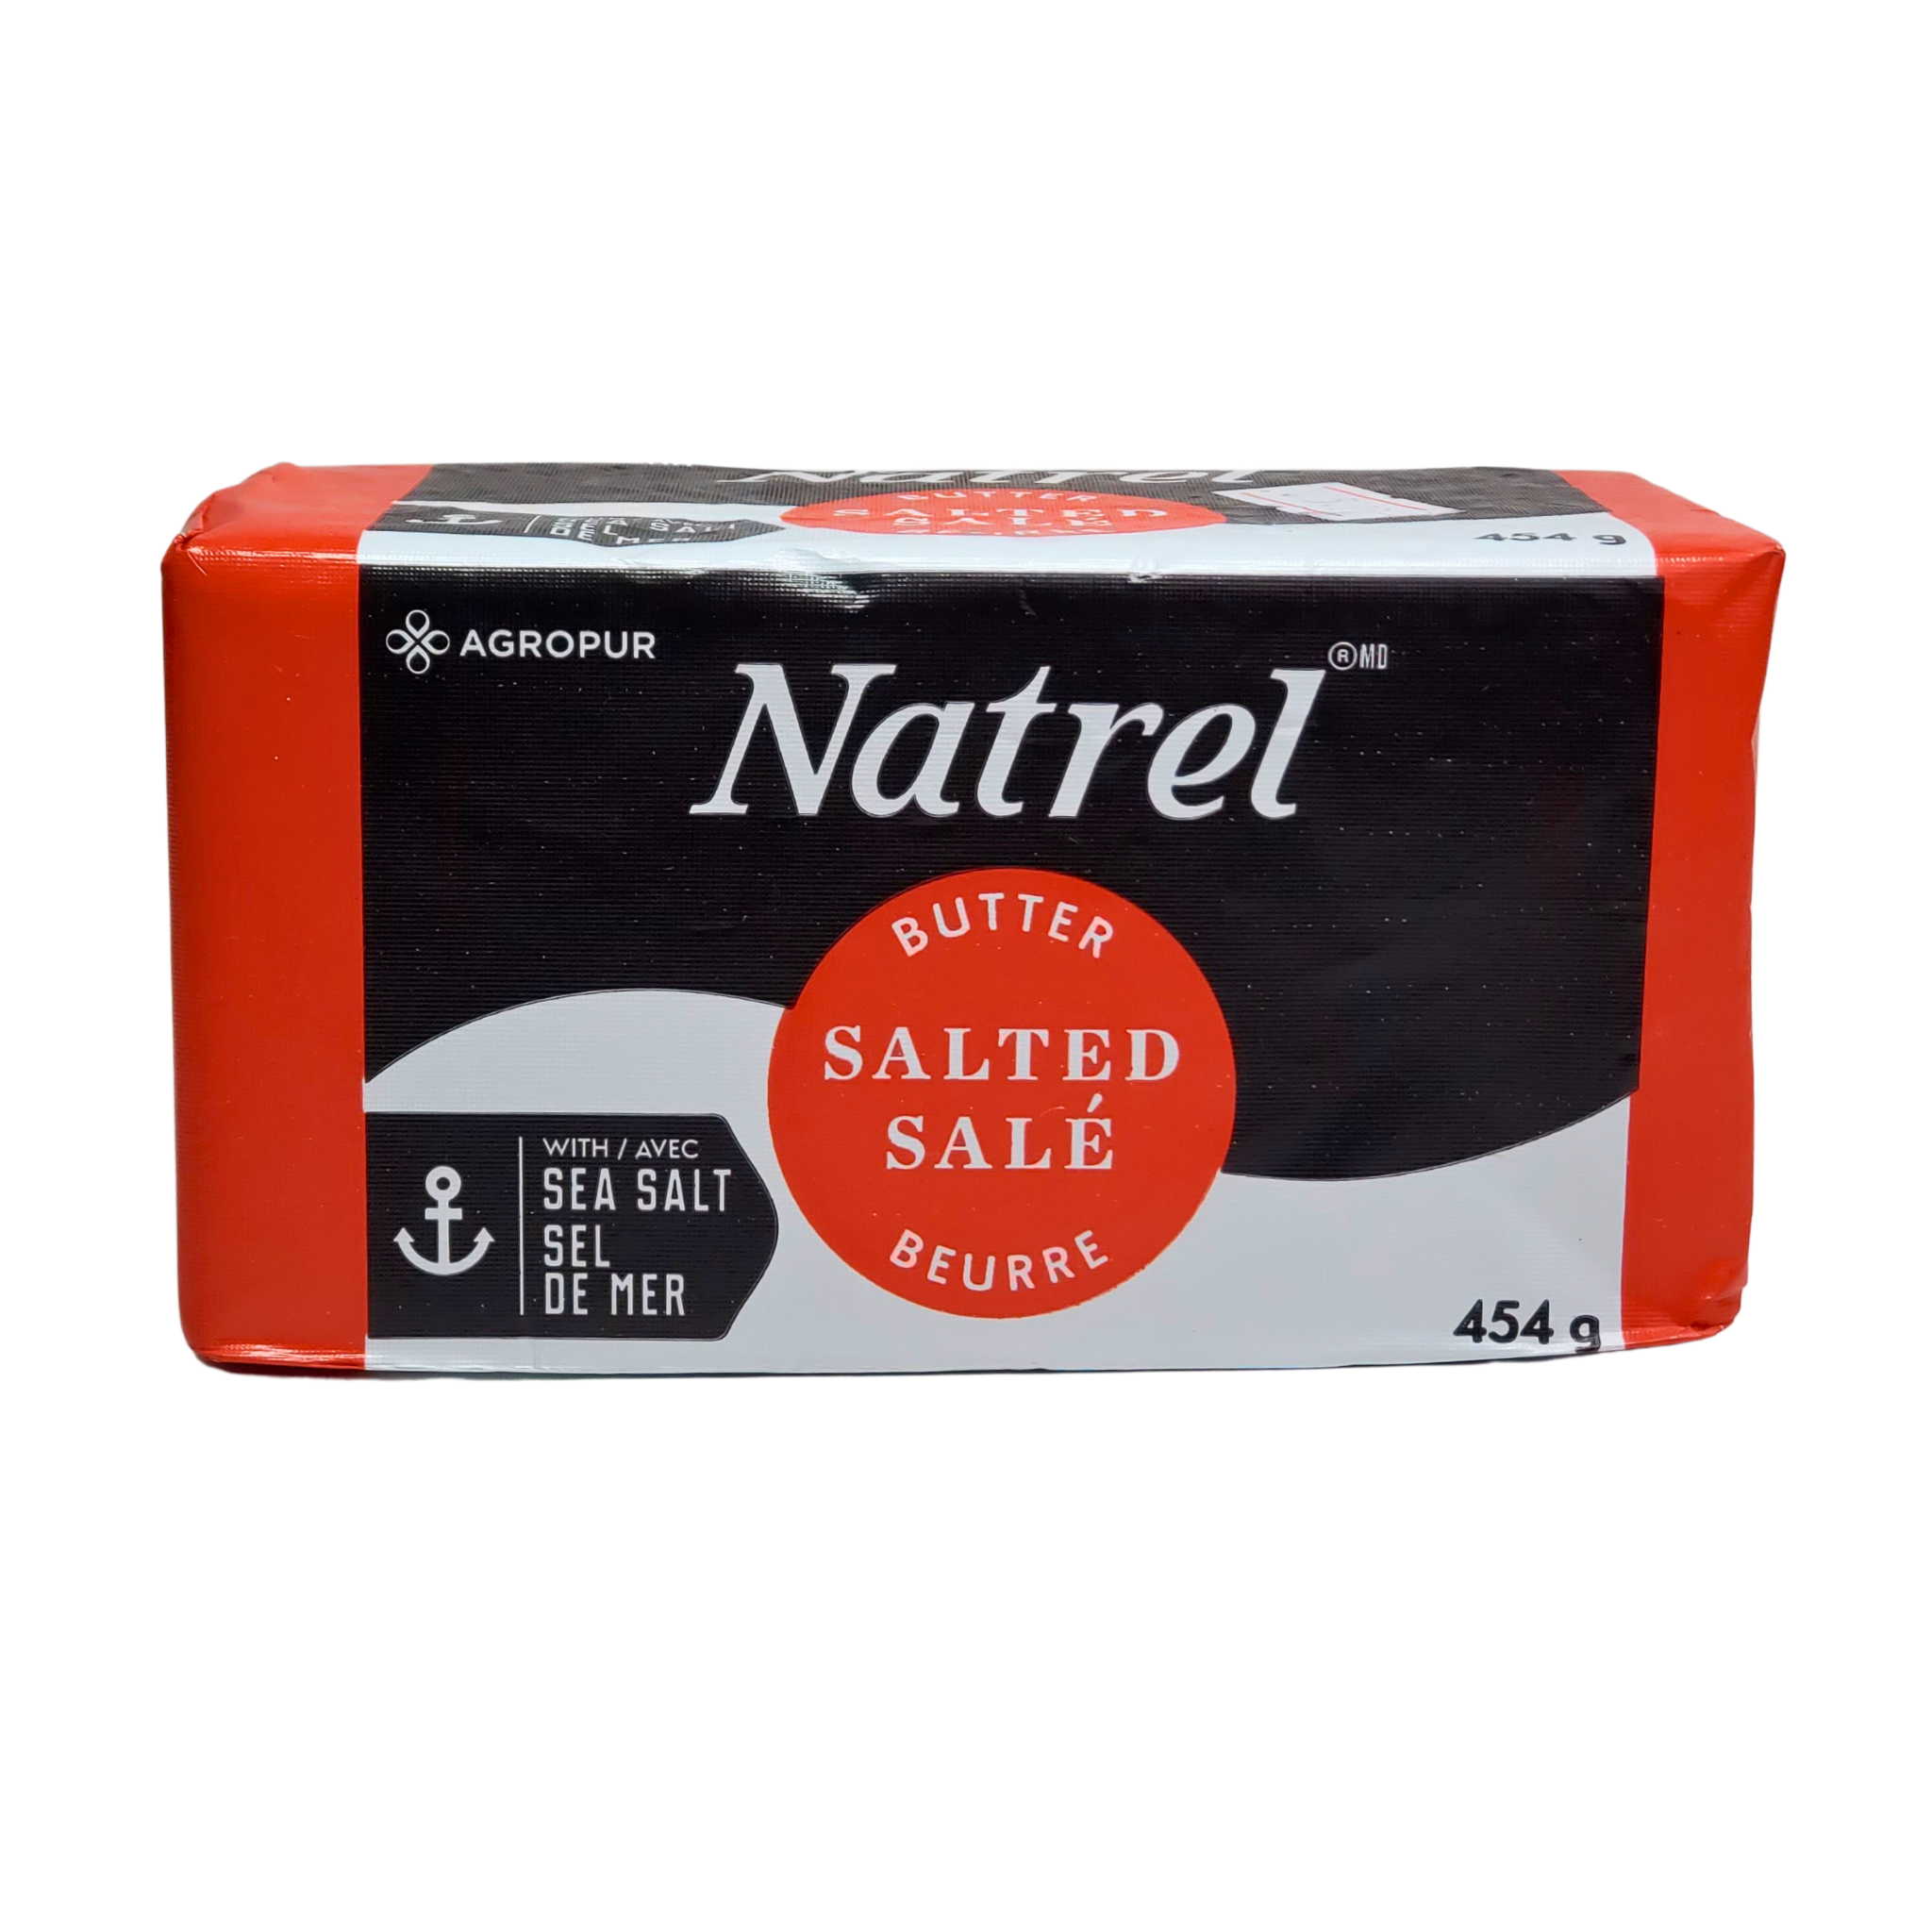 Natrel Salted Butter with Seasalt 454g